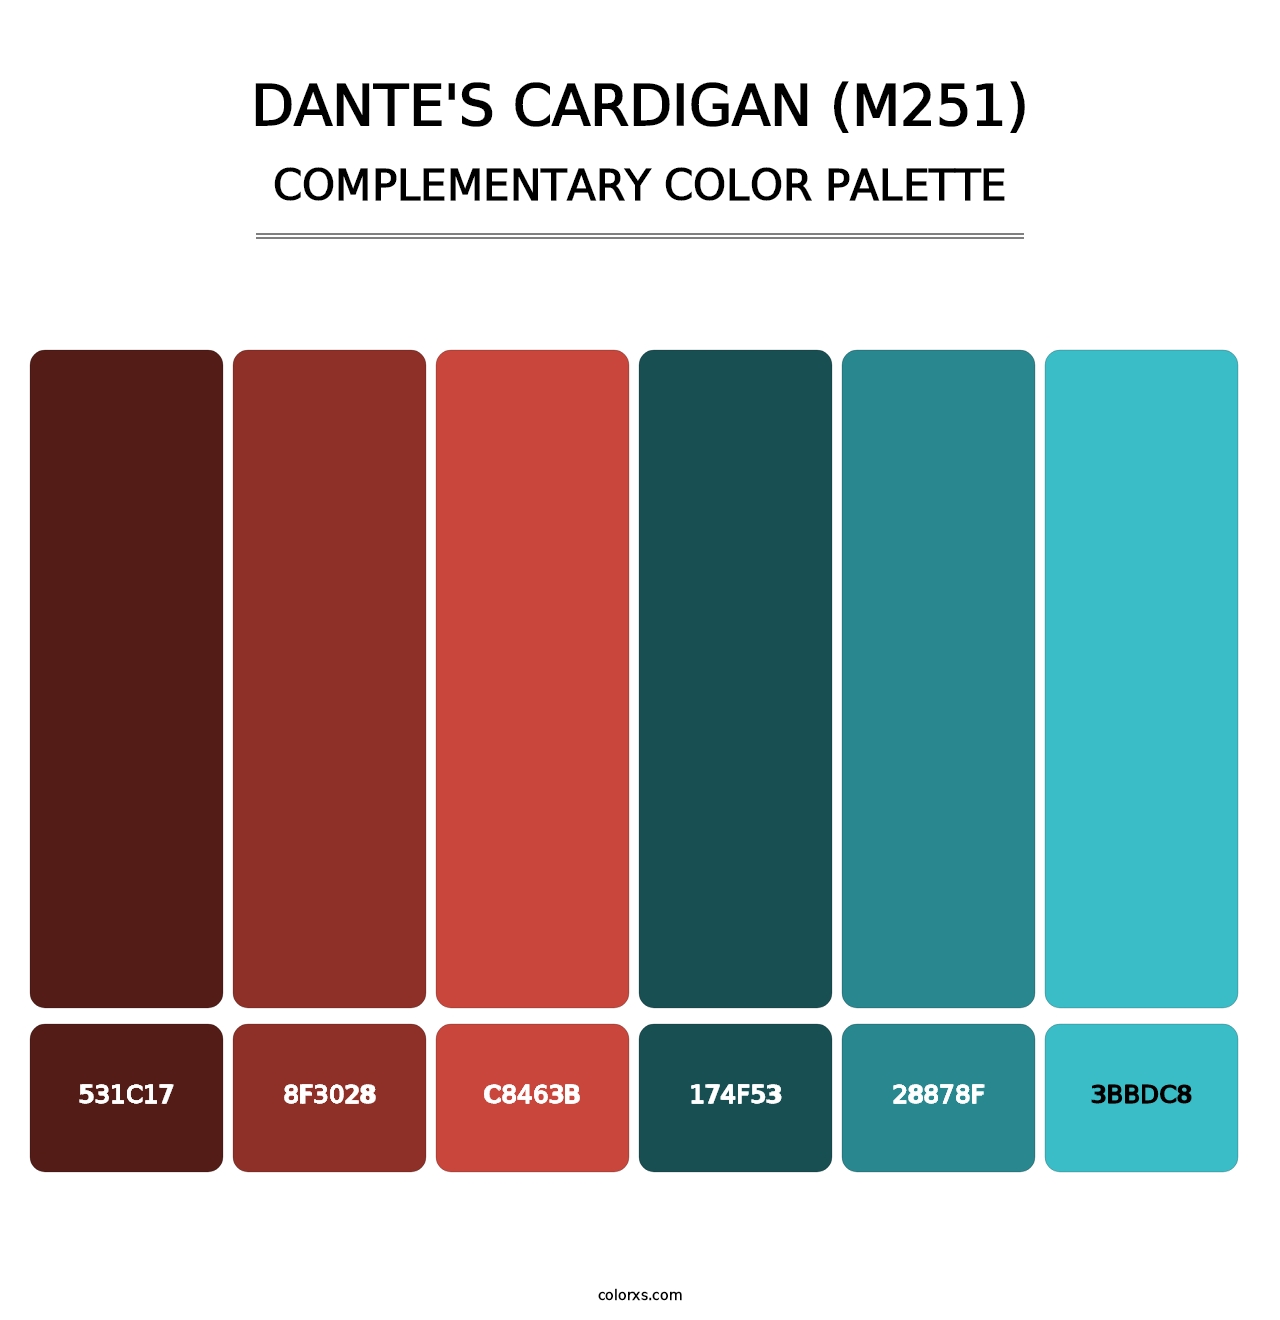 Dante's Cardigan (M251) - Complementary Color Palette